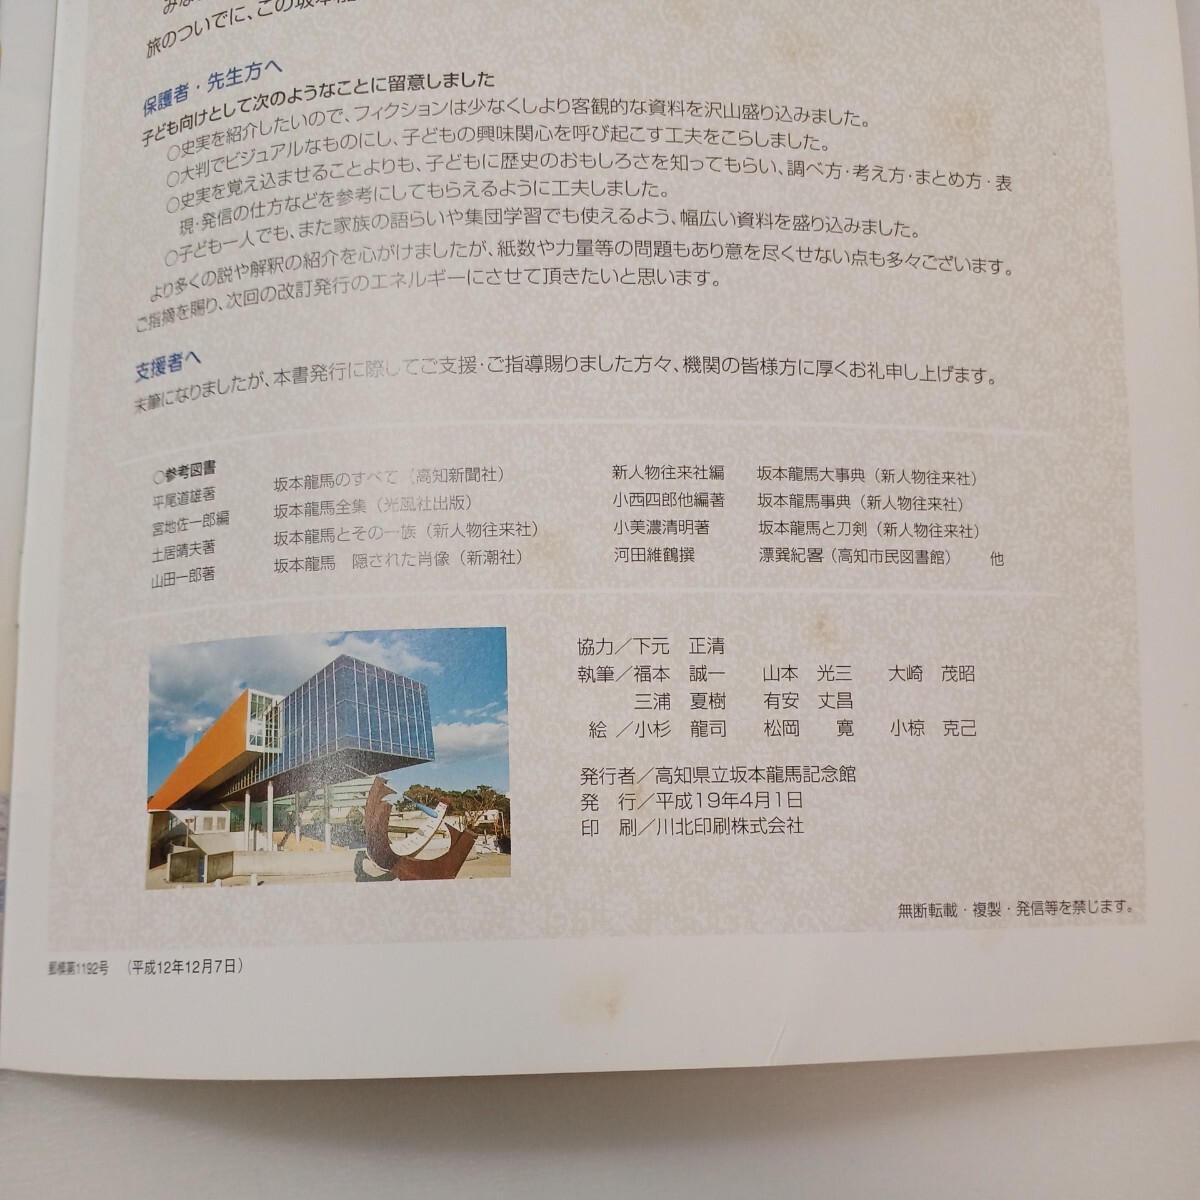 zaa-573♪坂本龍馬を知っちゅう?　 資料で調べる33年 　坂本龍馬記念館(2000/12/07)　